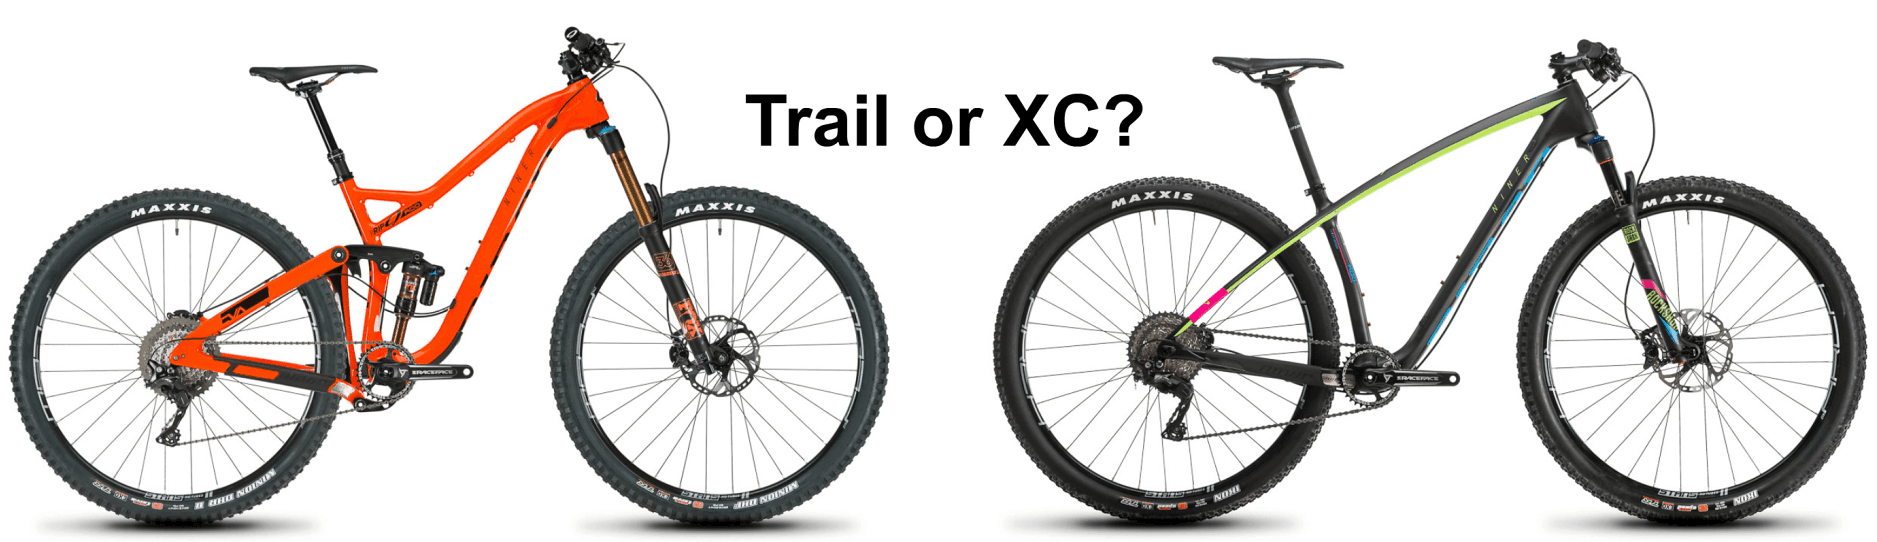 xc v trail mountain bike